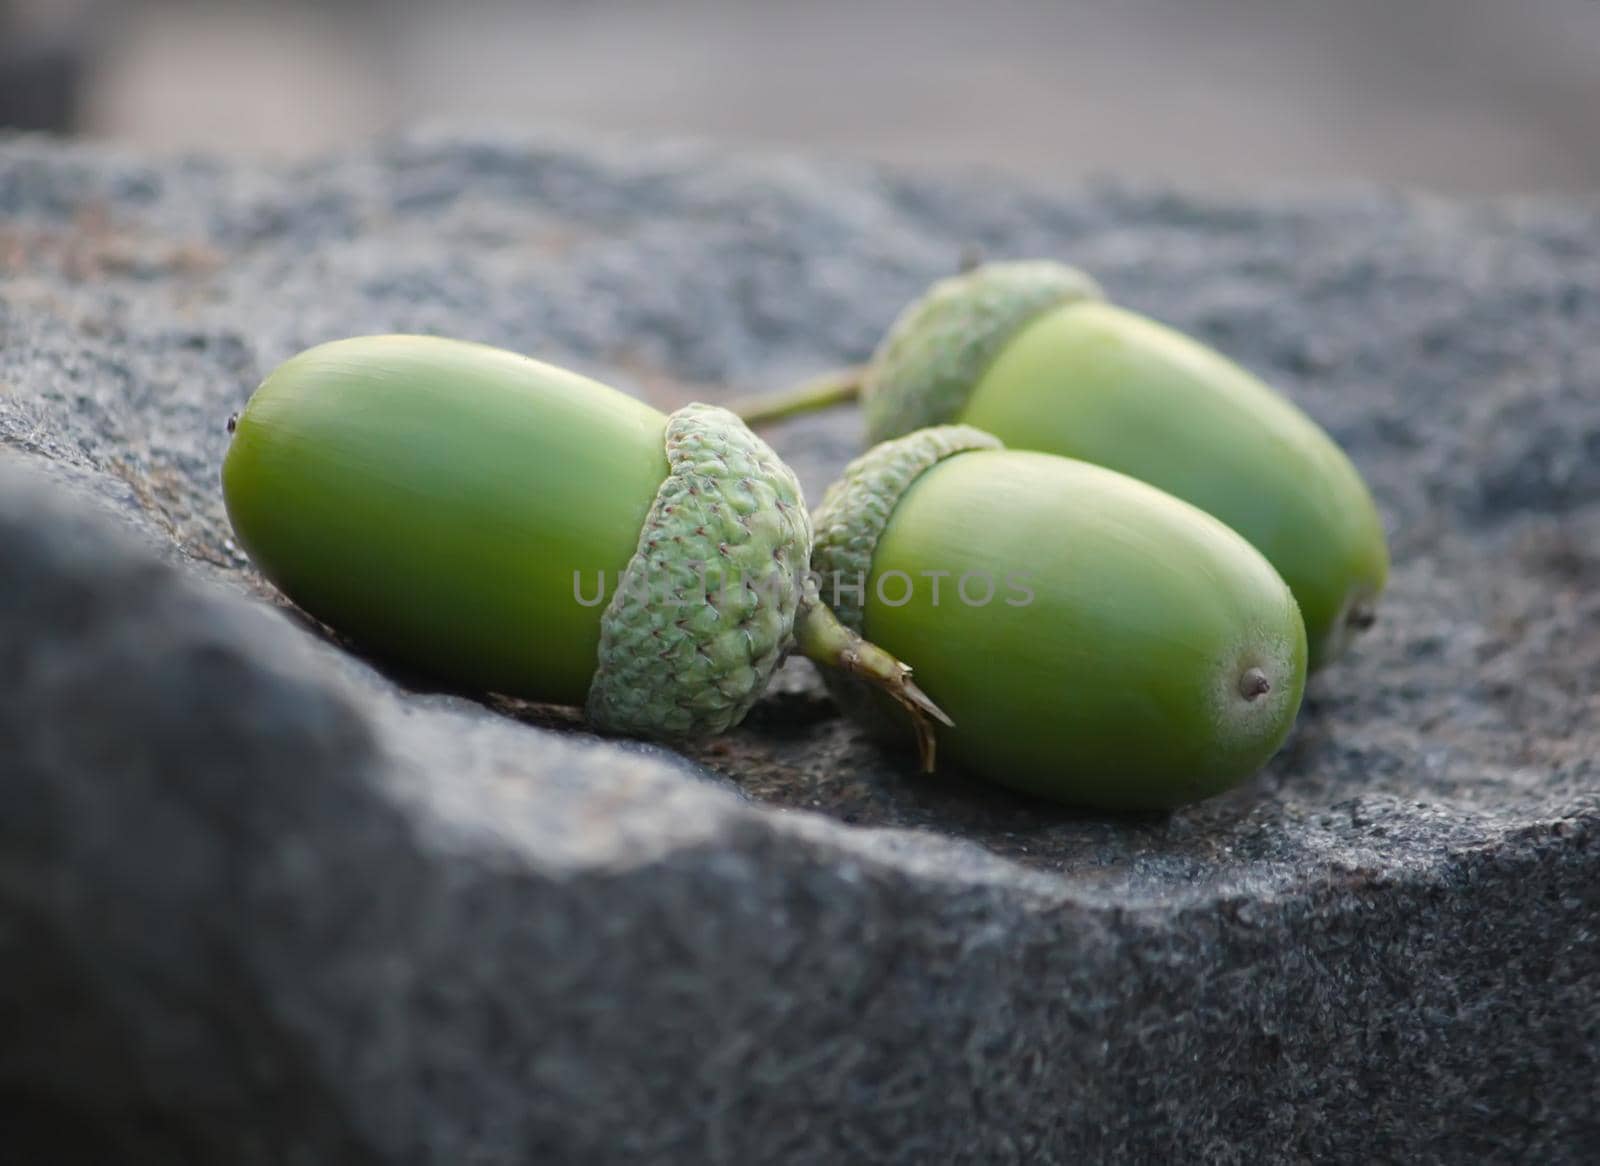 Three green acorns on a stone surface.